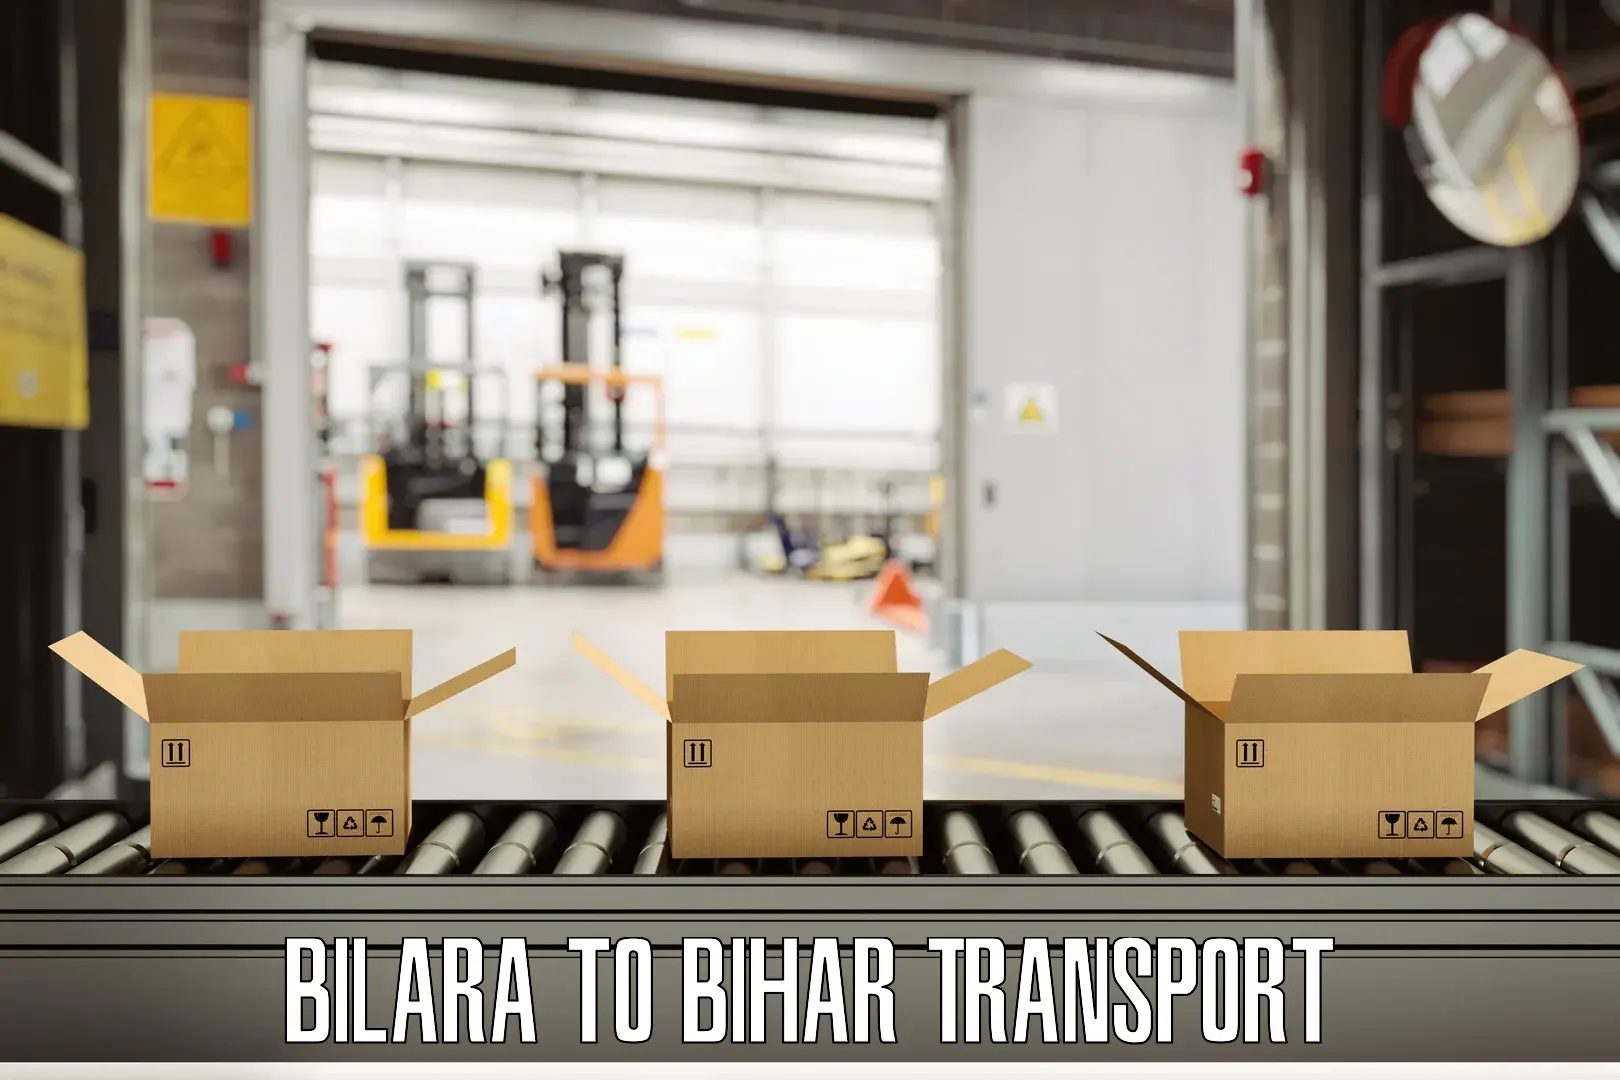 Transport in sharing Bilara to Bihar